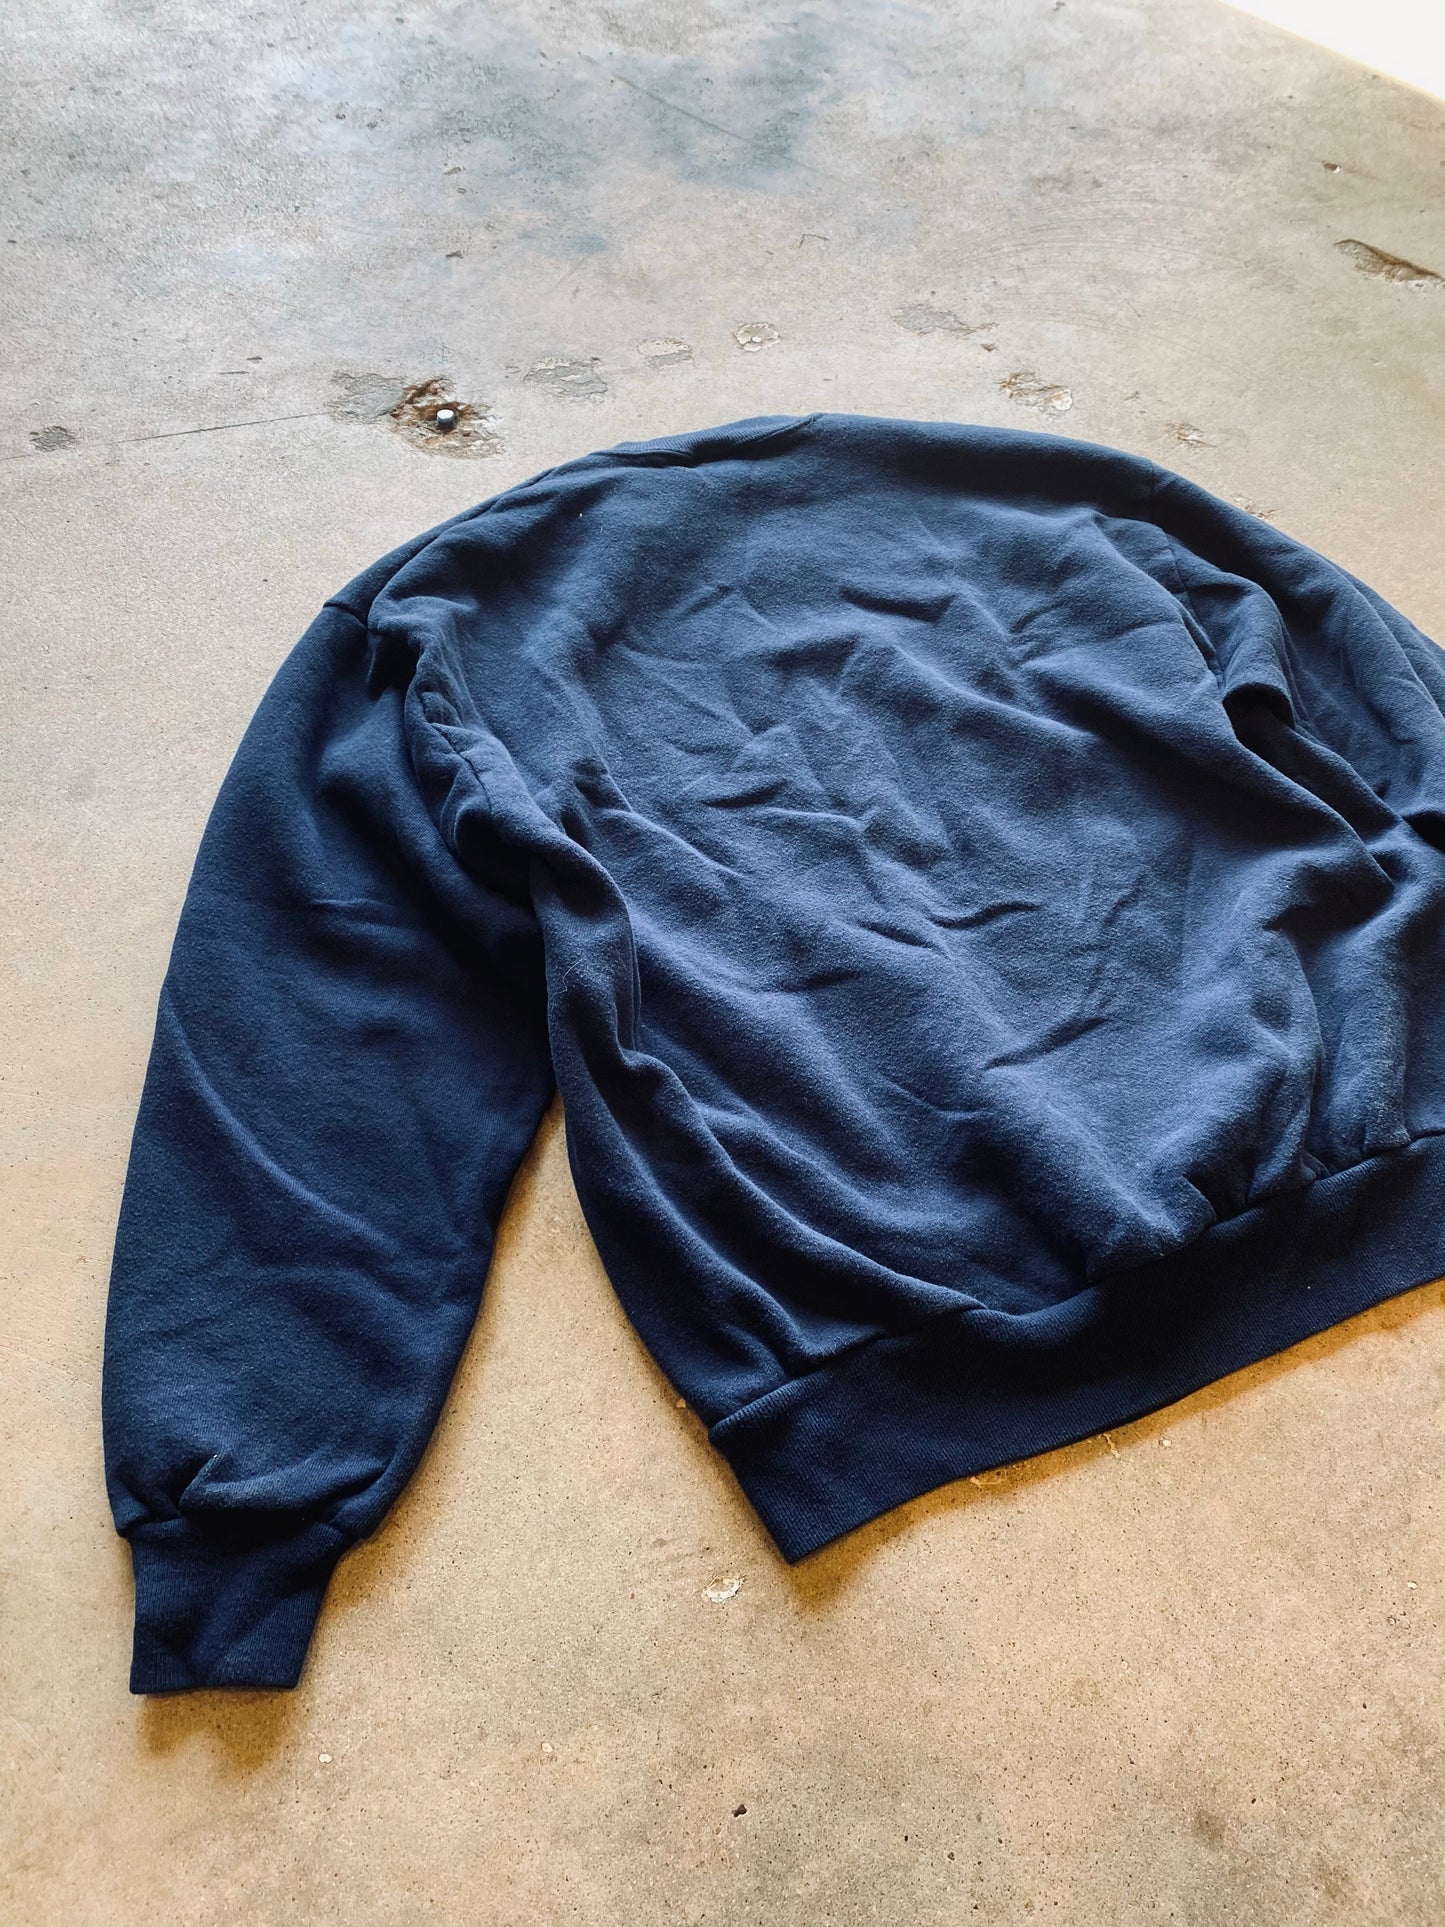 1990s Jerzees Pullover Sweatshirt | X-Large